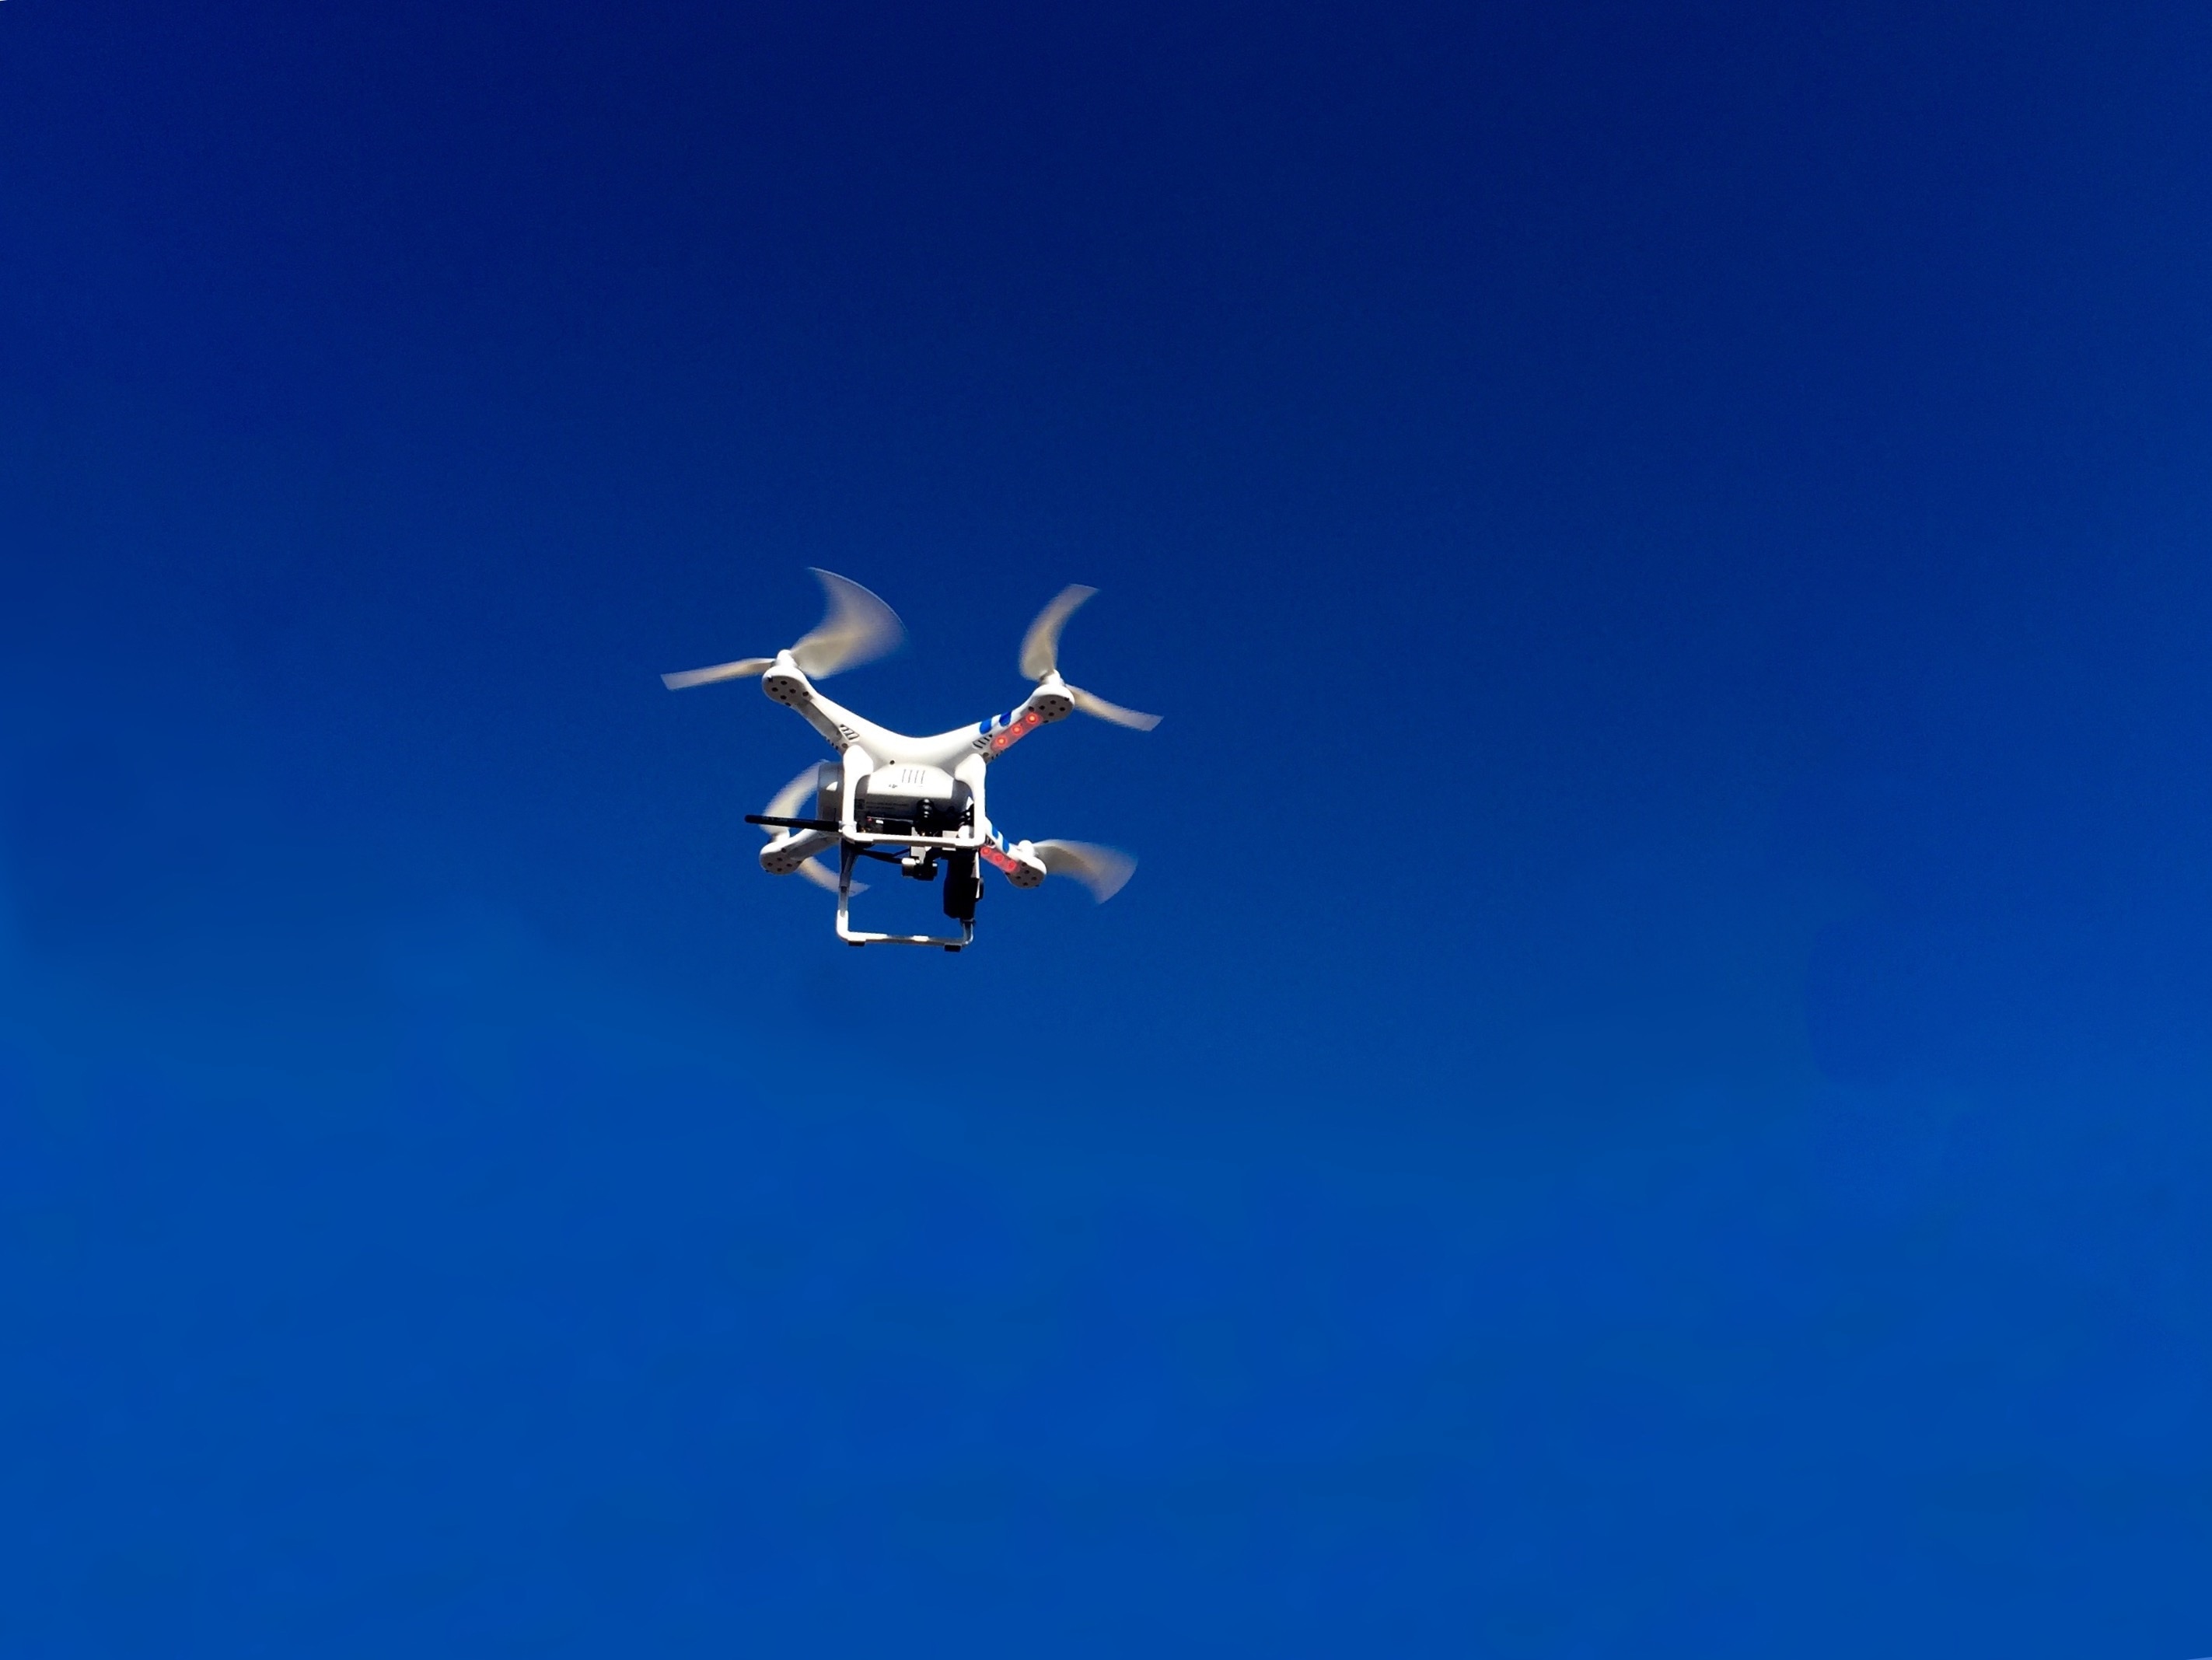 flying white quadcopter  during daytime